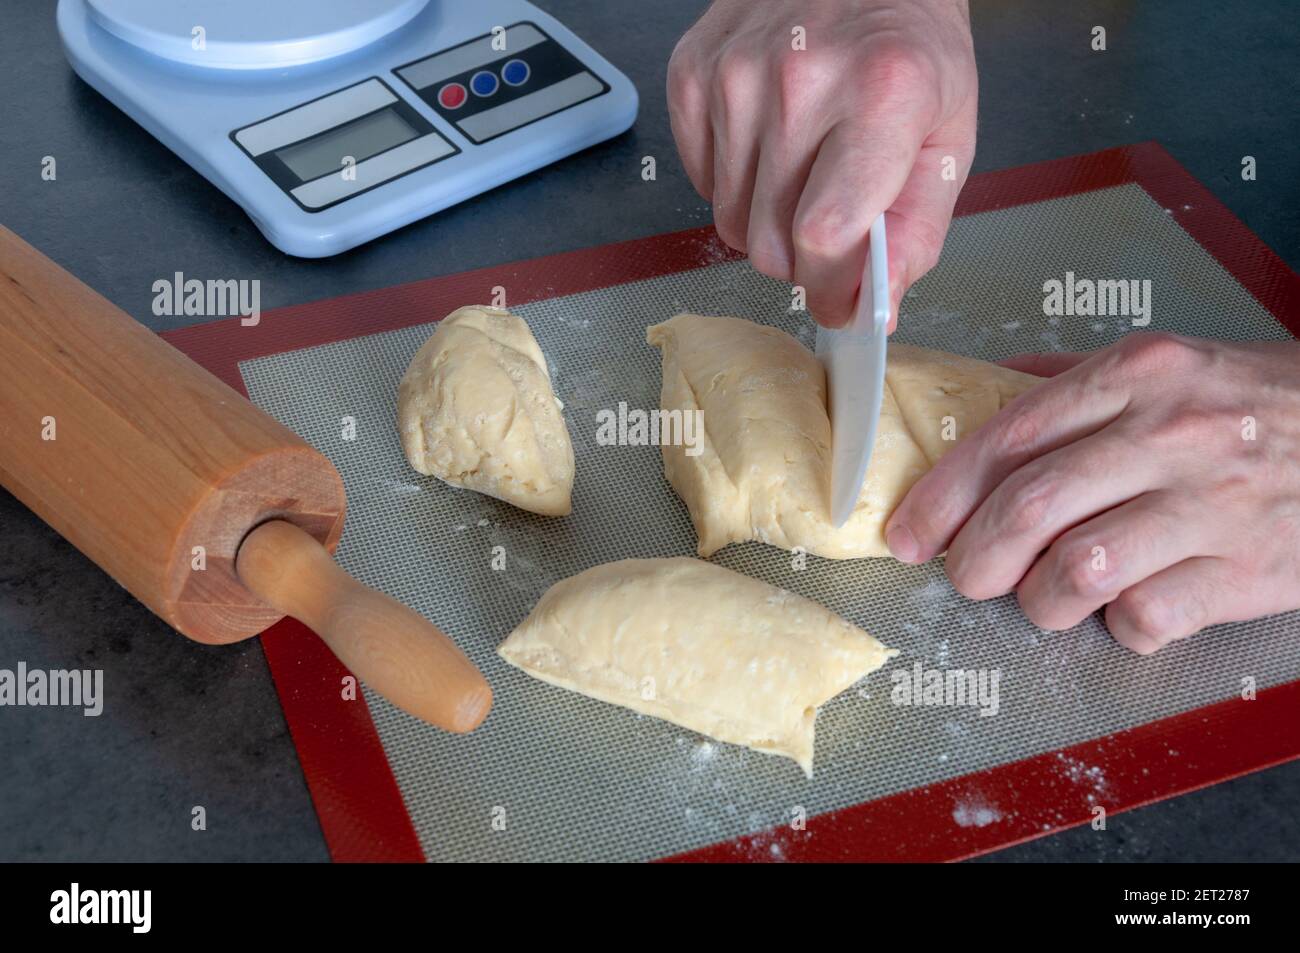 Rolling pin, a flexible plastic cutter, weighing machine. Hands cutting the dough. Stock Photo